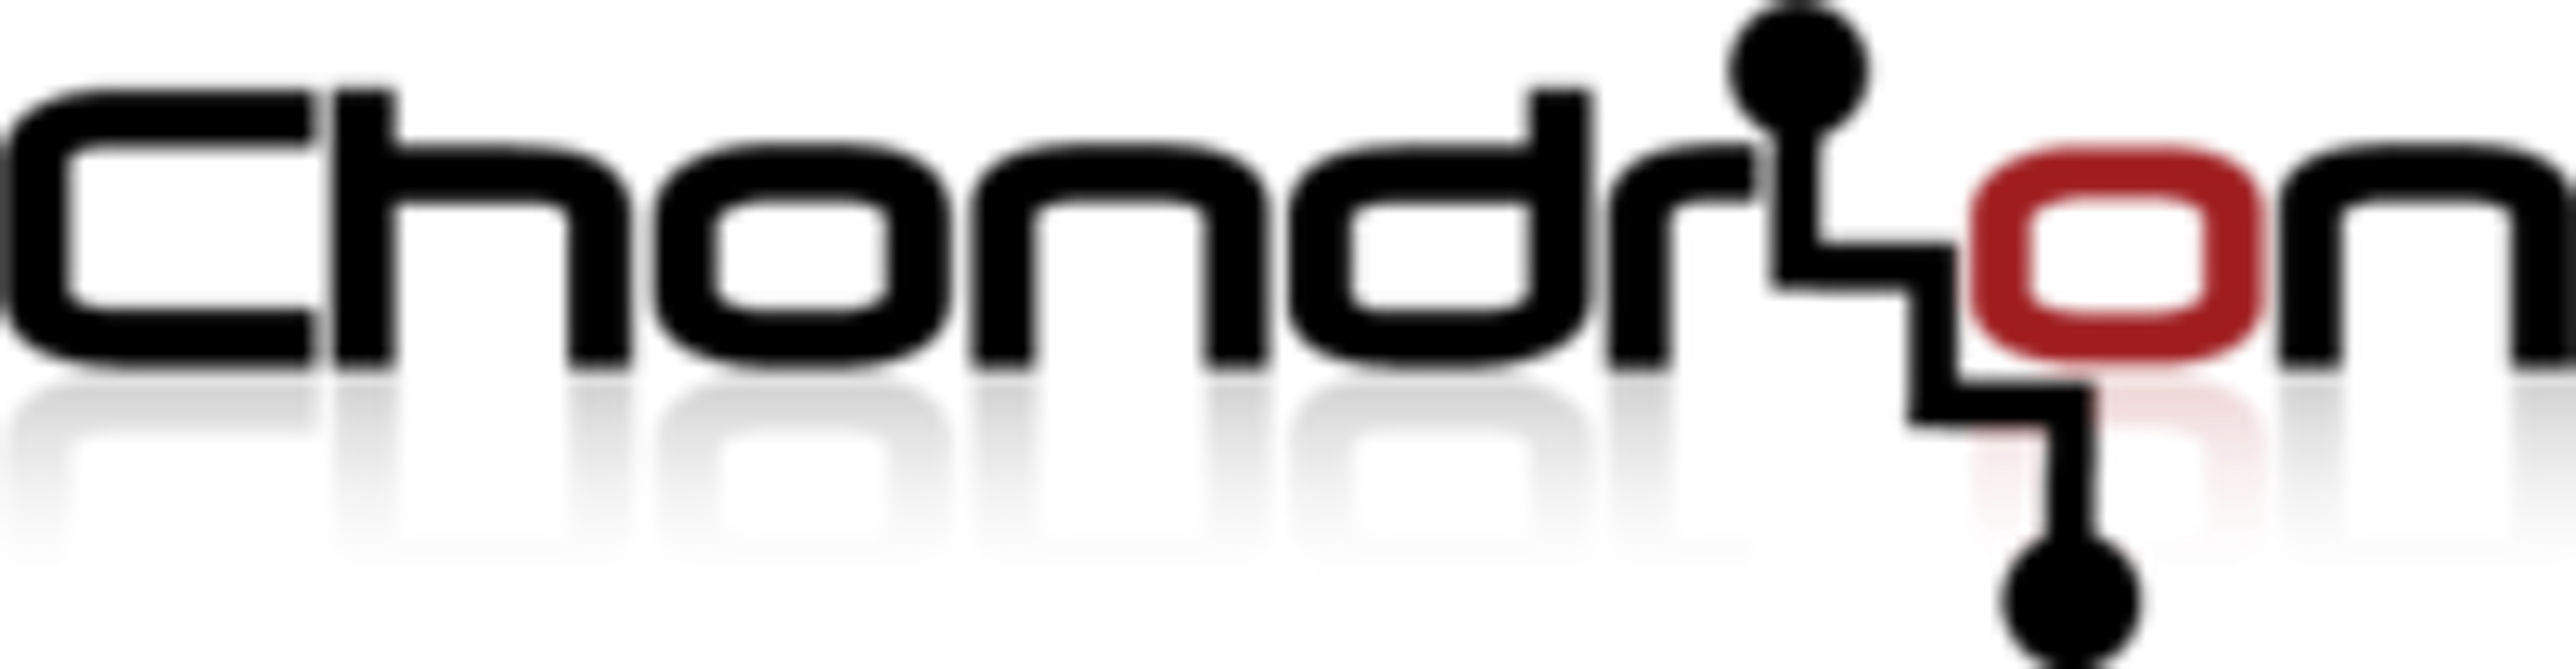 Chondrion Logo